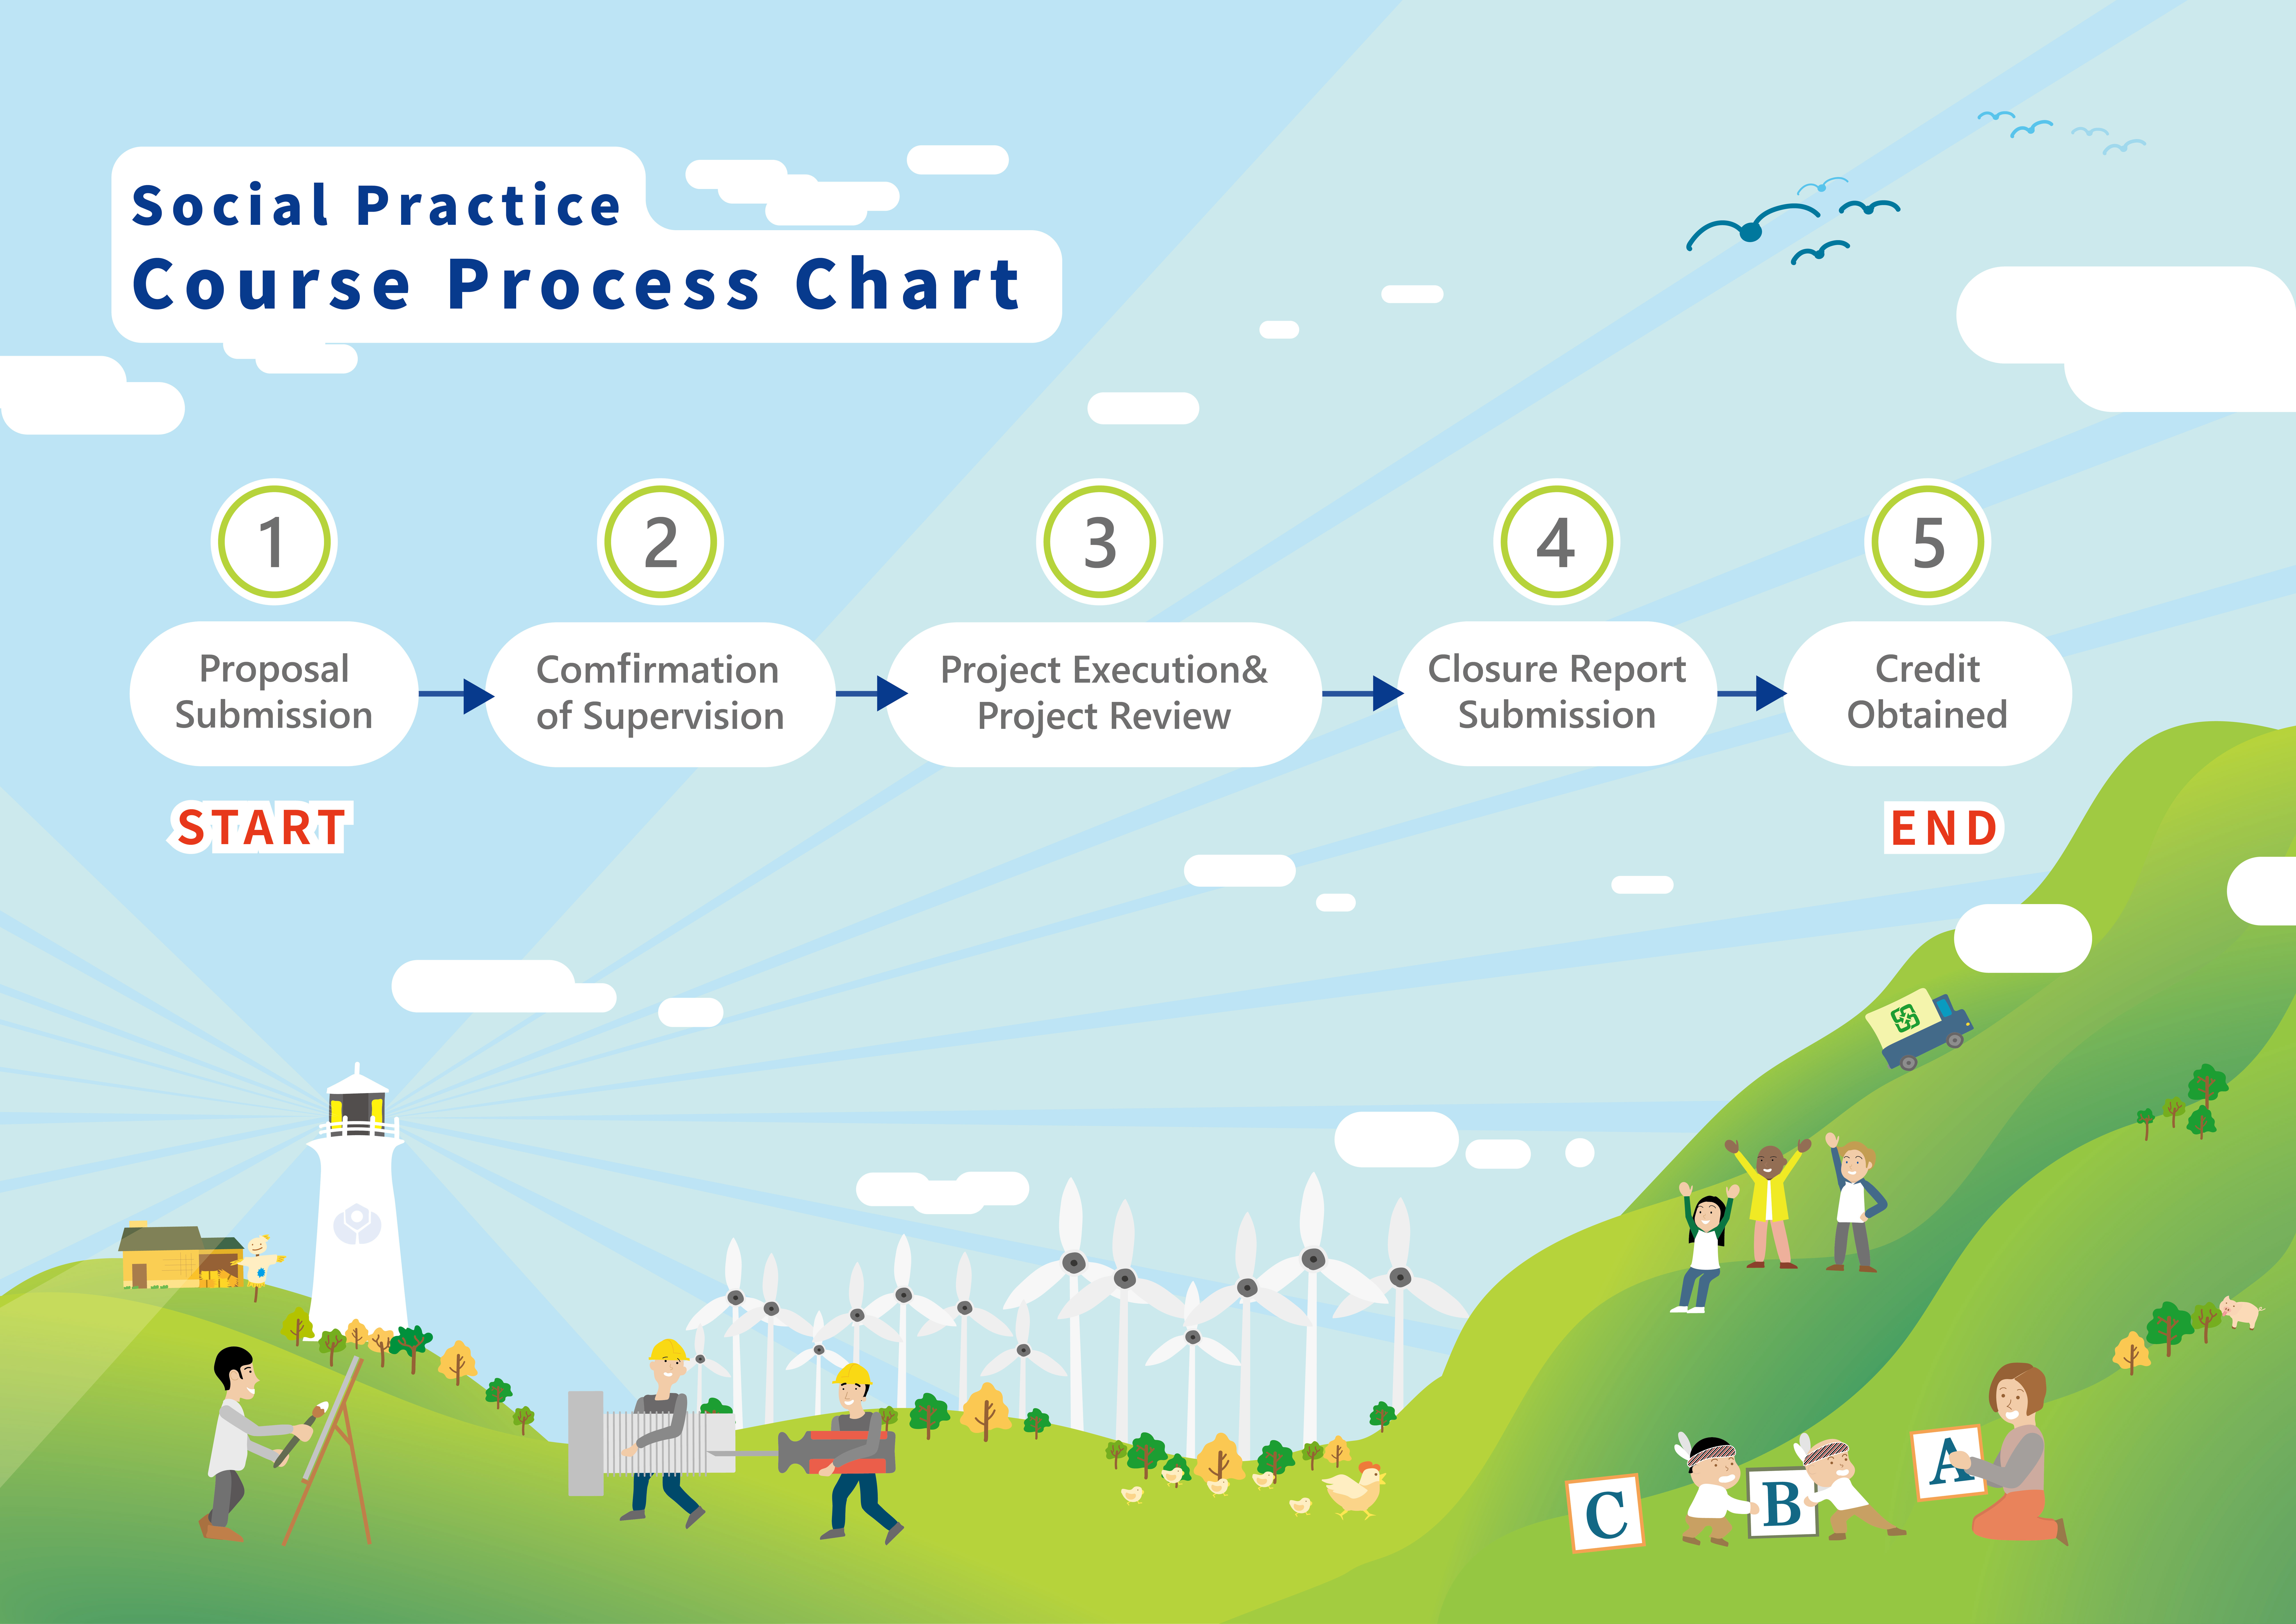 Process Guide